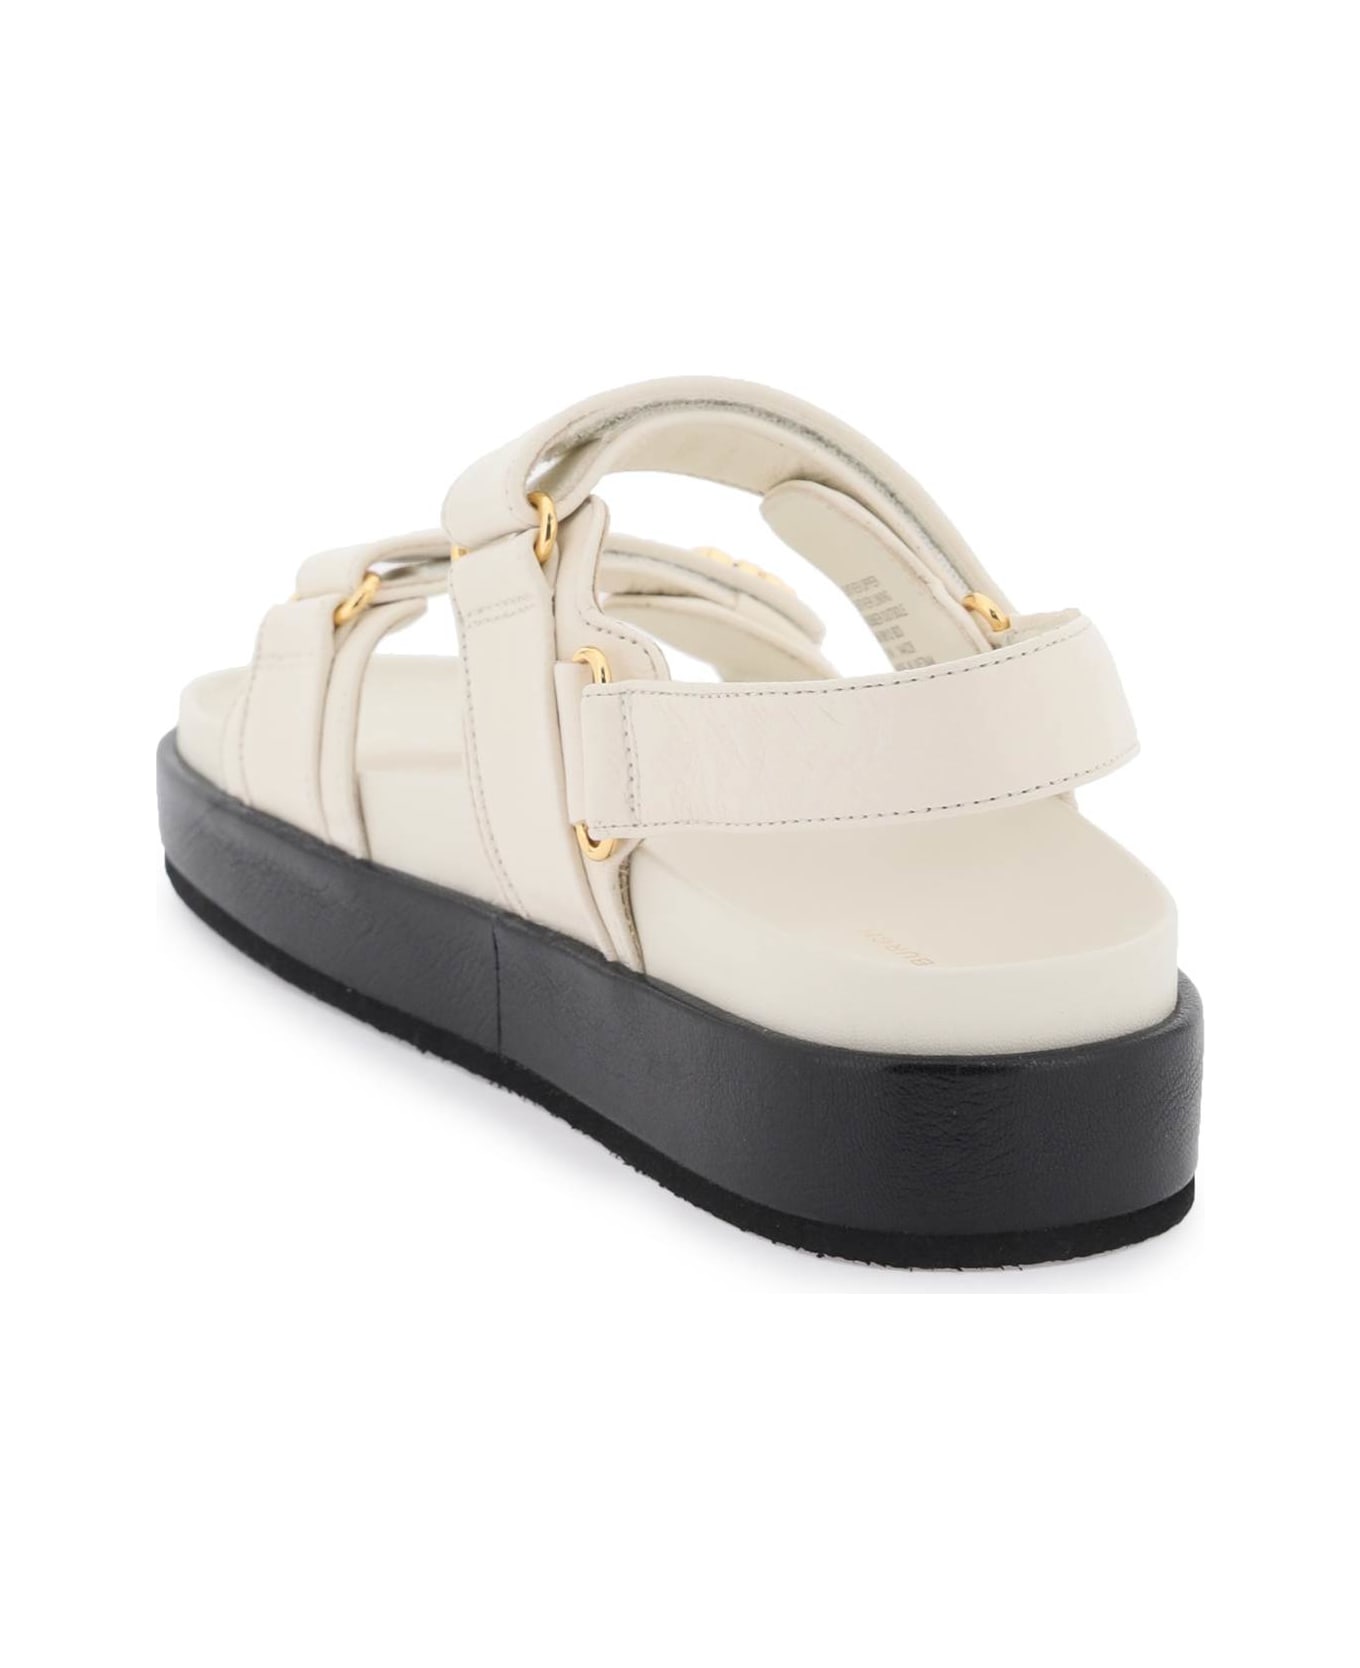 Tory Burch Kira Sport Sandals - NEW IVORY (White)